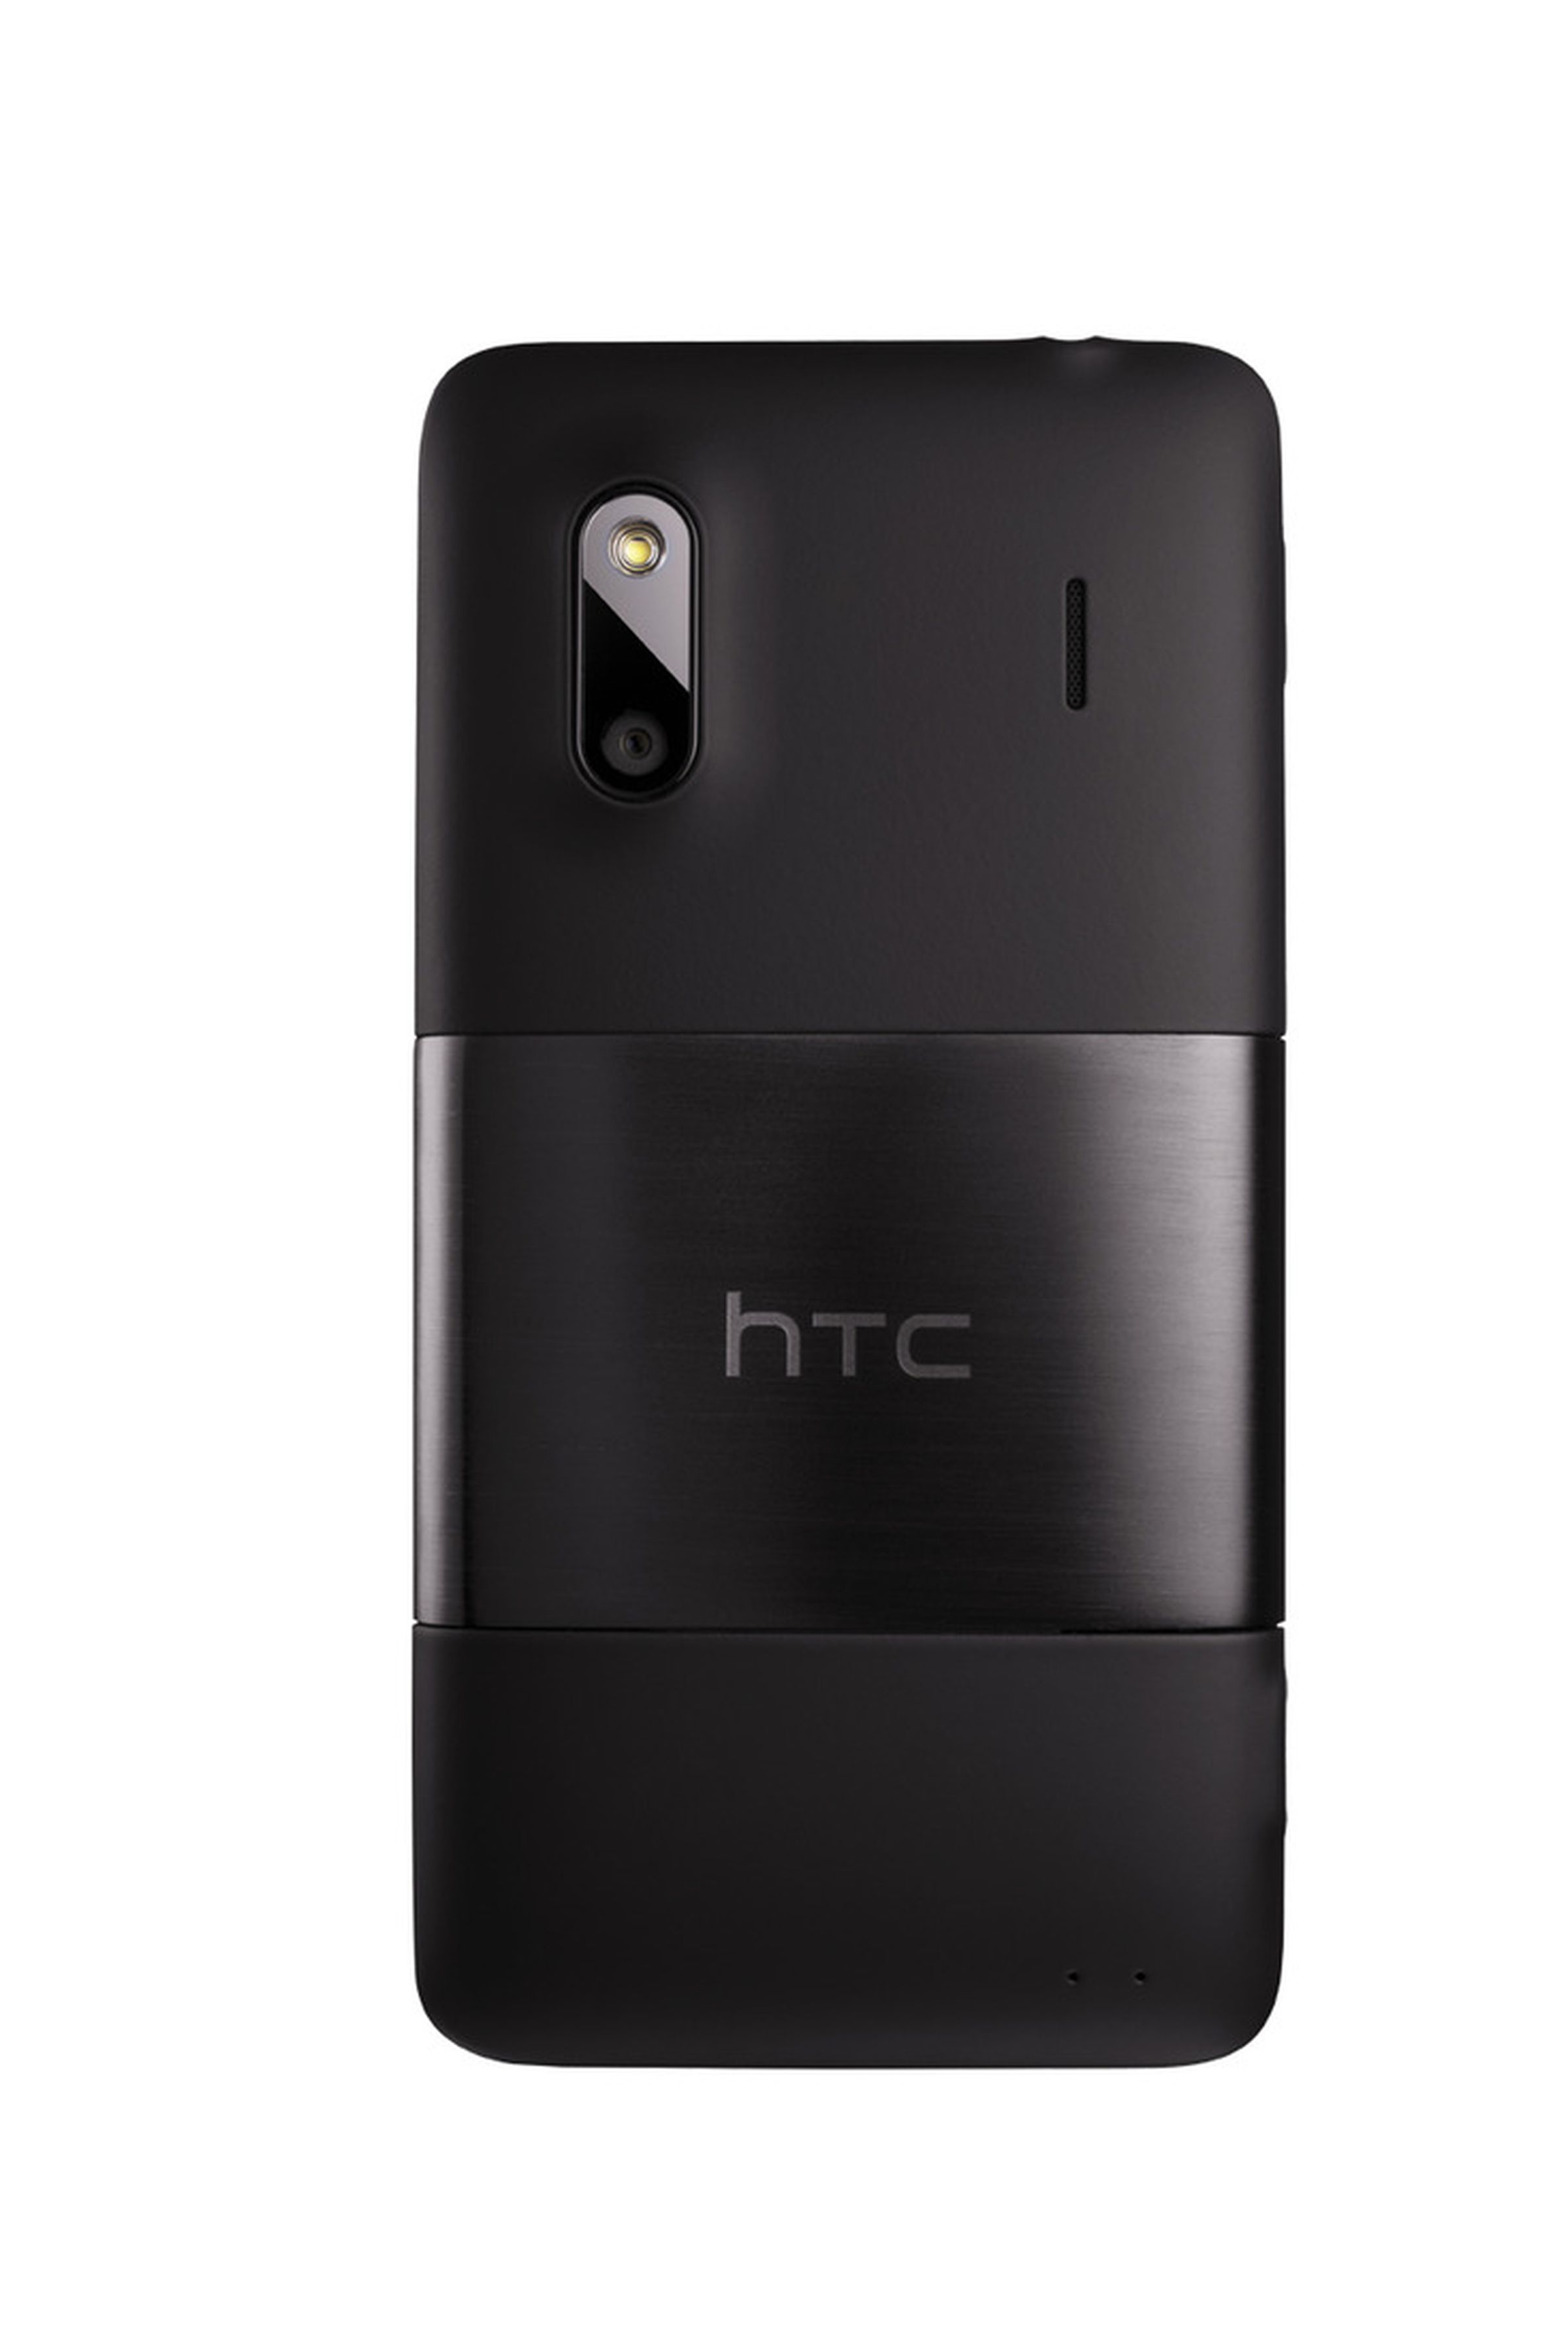 HTC Evo Design 4G announced